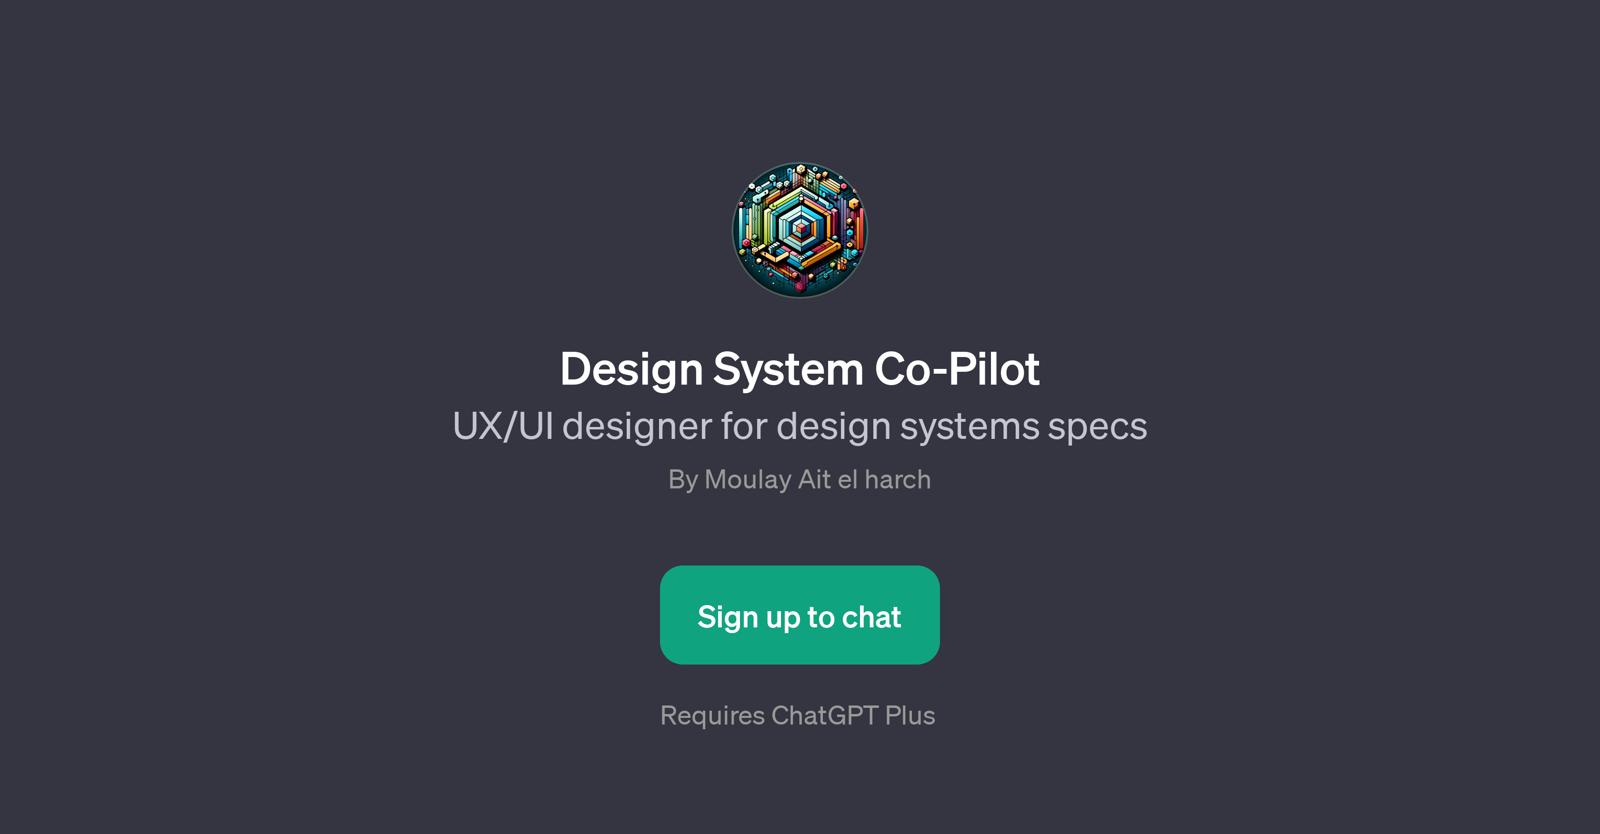 Design System Co-Pilot website